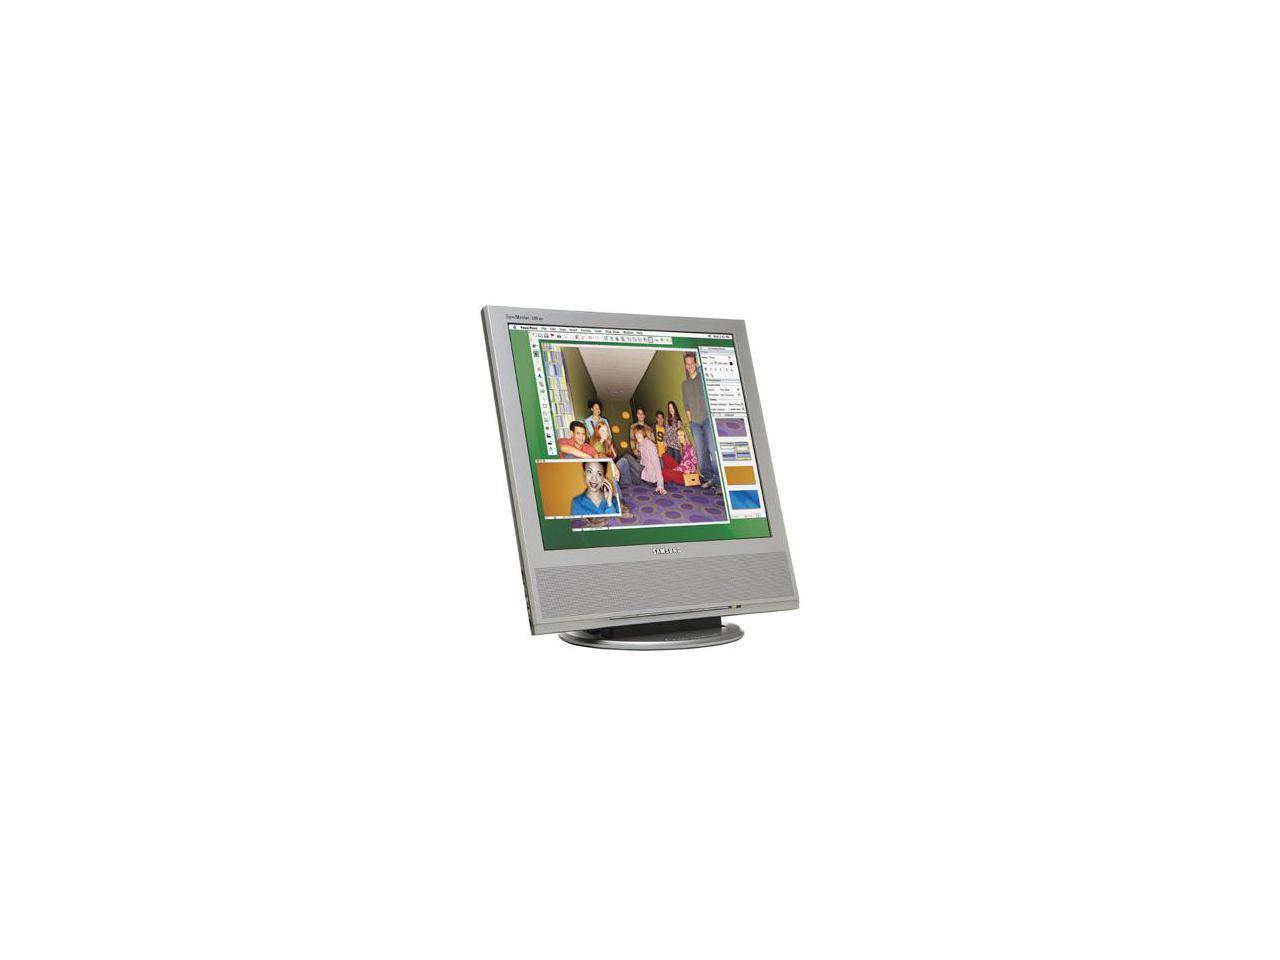 Samsung 510MP Silver 15" 25ms LCD Monitor w/ TV Tuner 250 cd/m2 350:1 - Samsung Parts USA